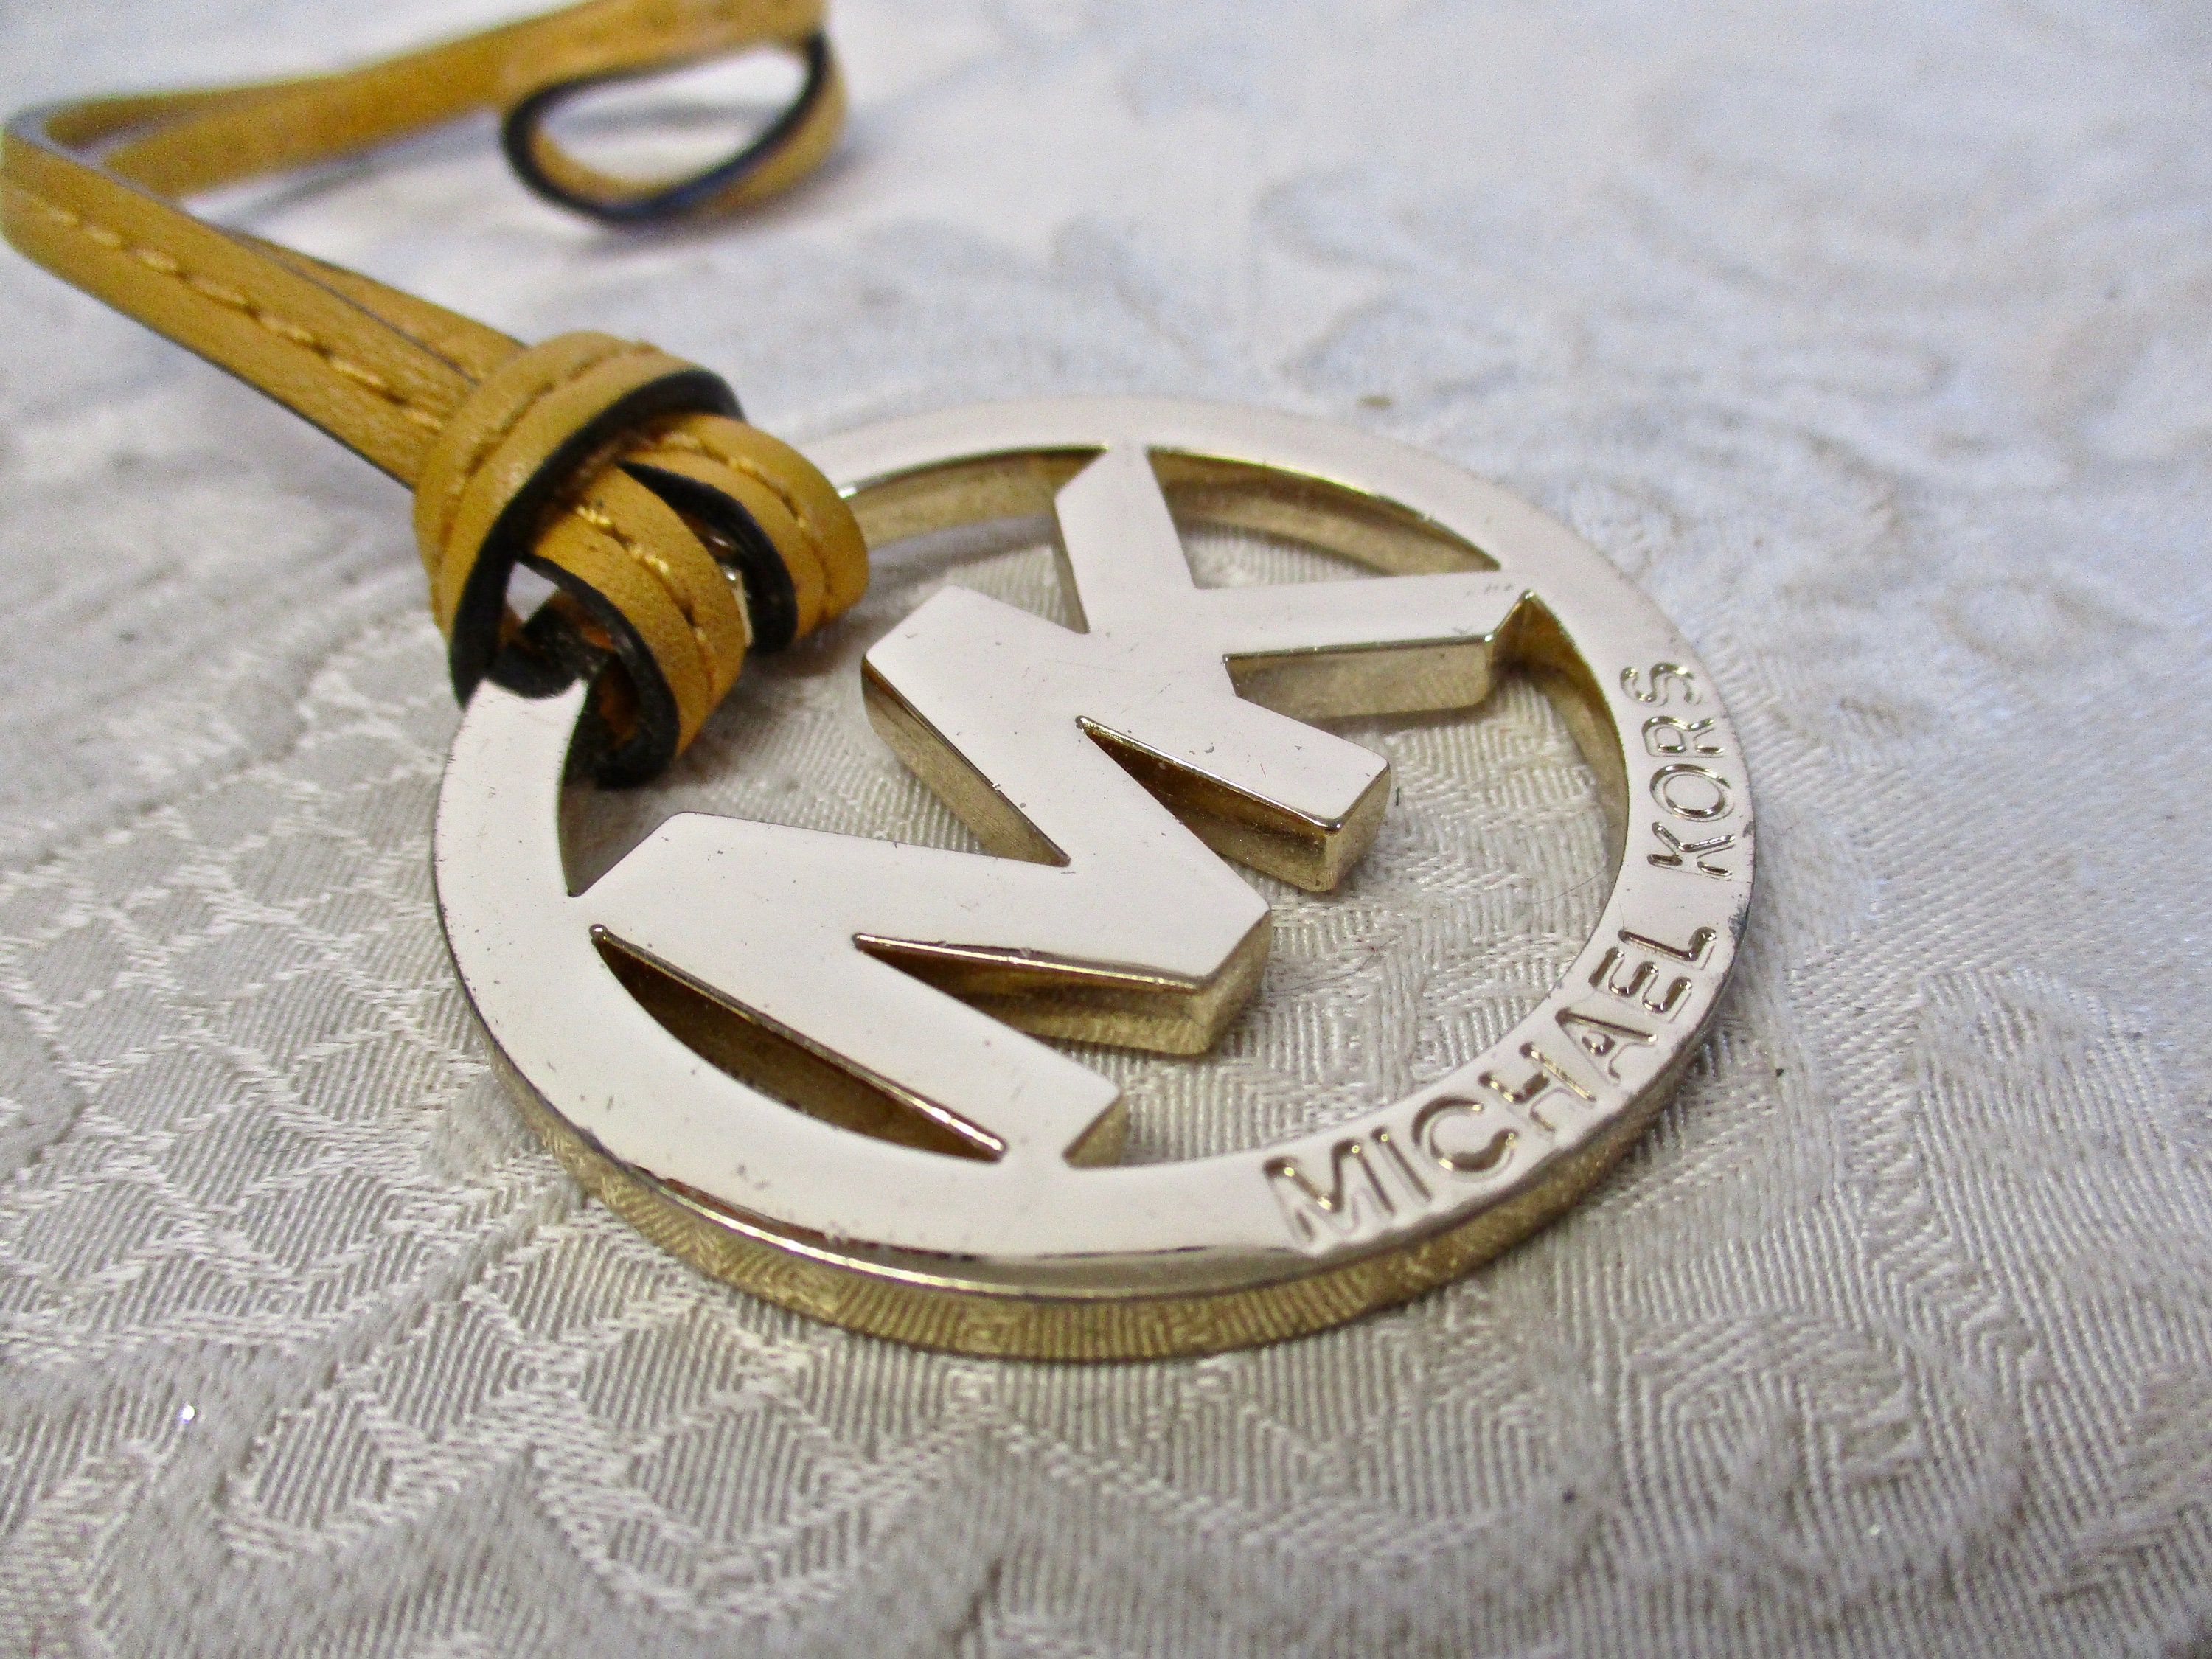 Michael Kors Mini Purse Keychain Fob Gold Color Bag charm Key holder